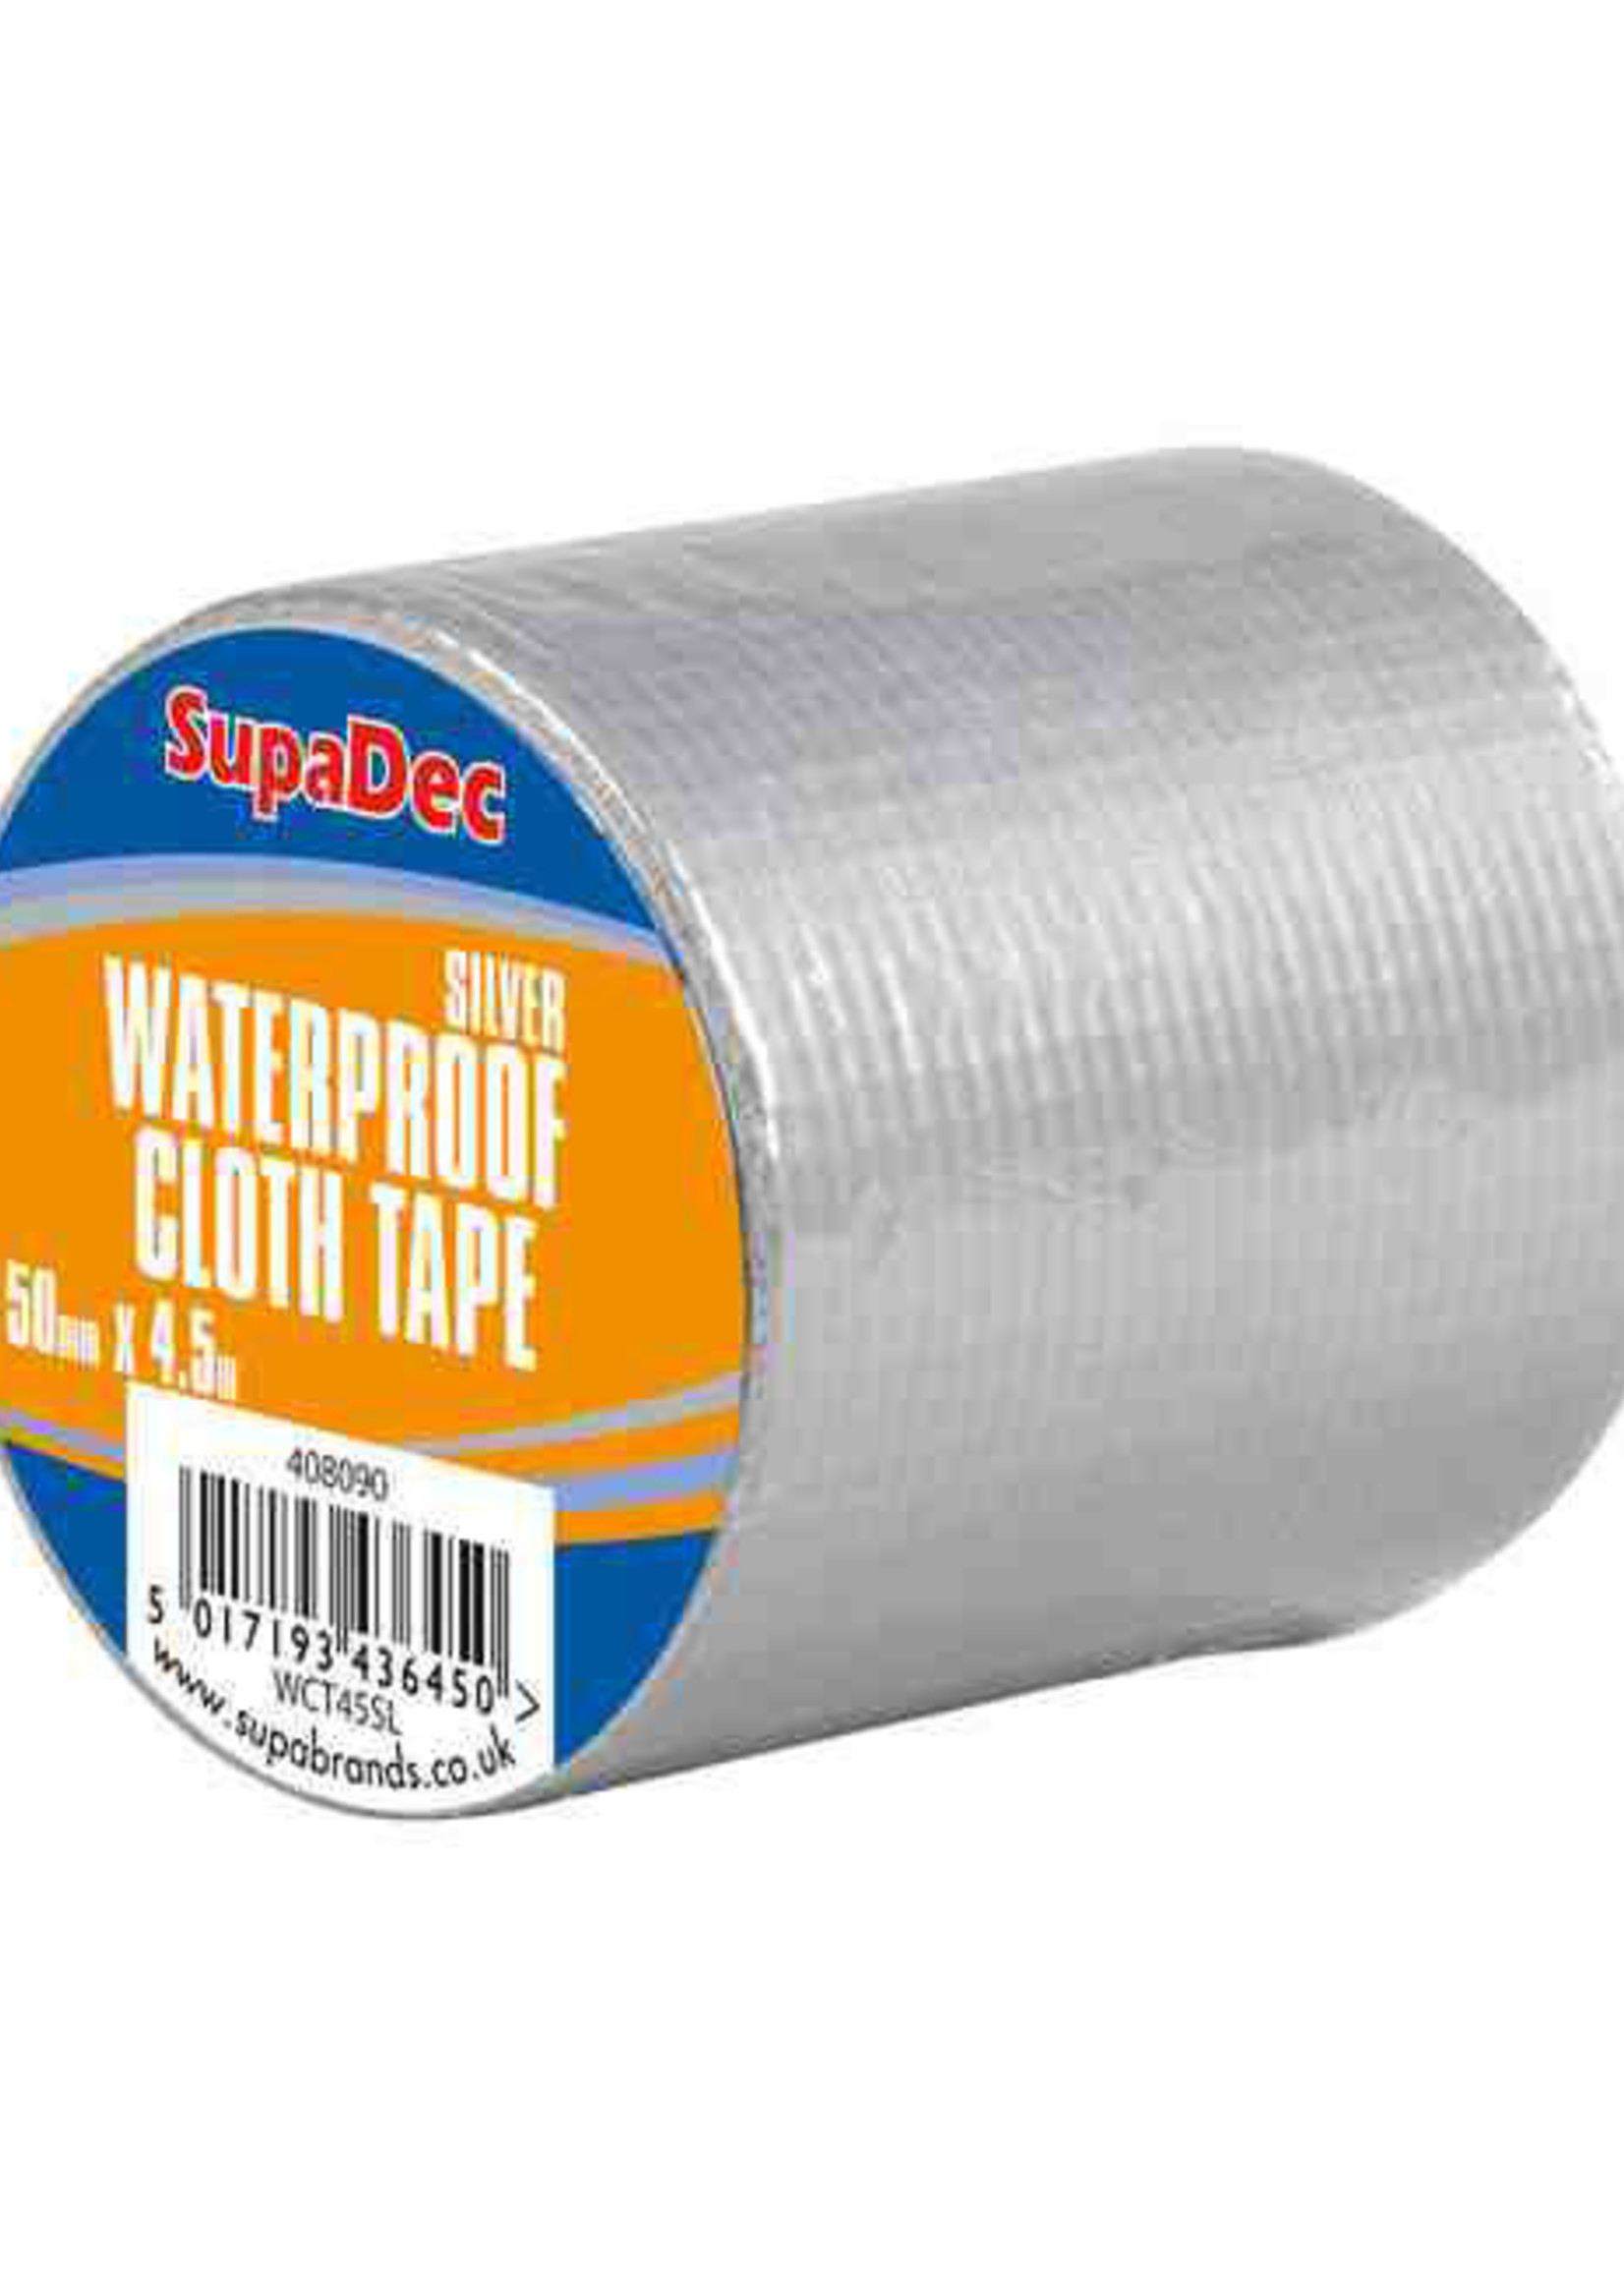 SupaDec SupaDec Waterproof Cloth Tape 48mm x 4.5m Silver